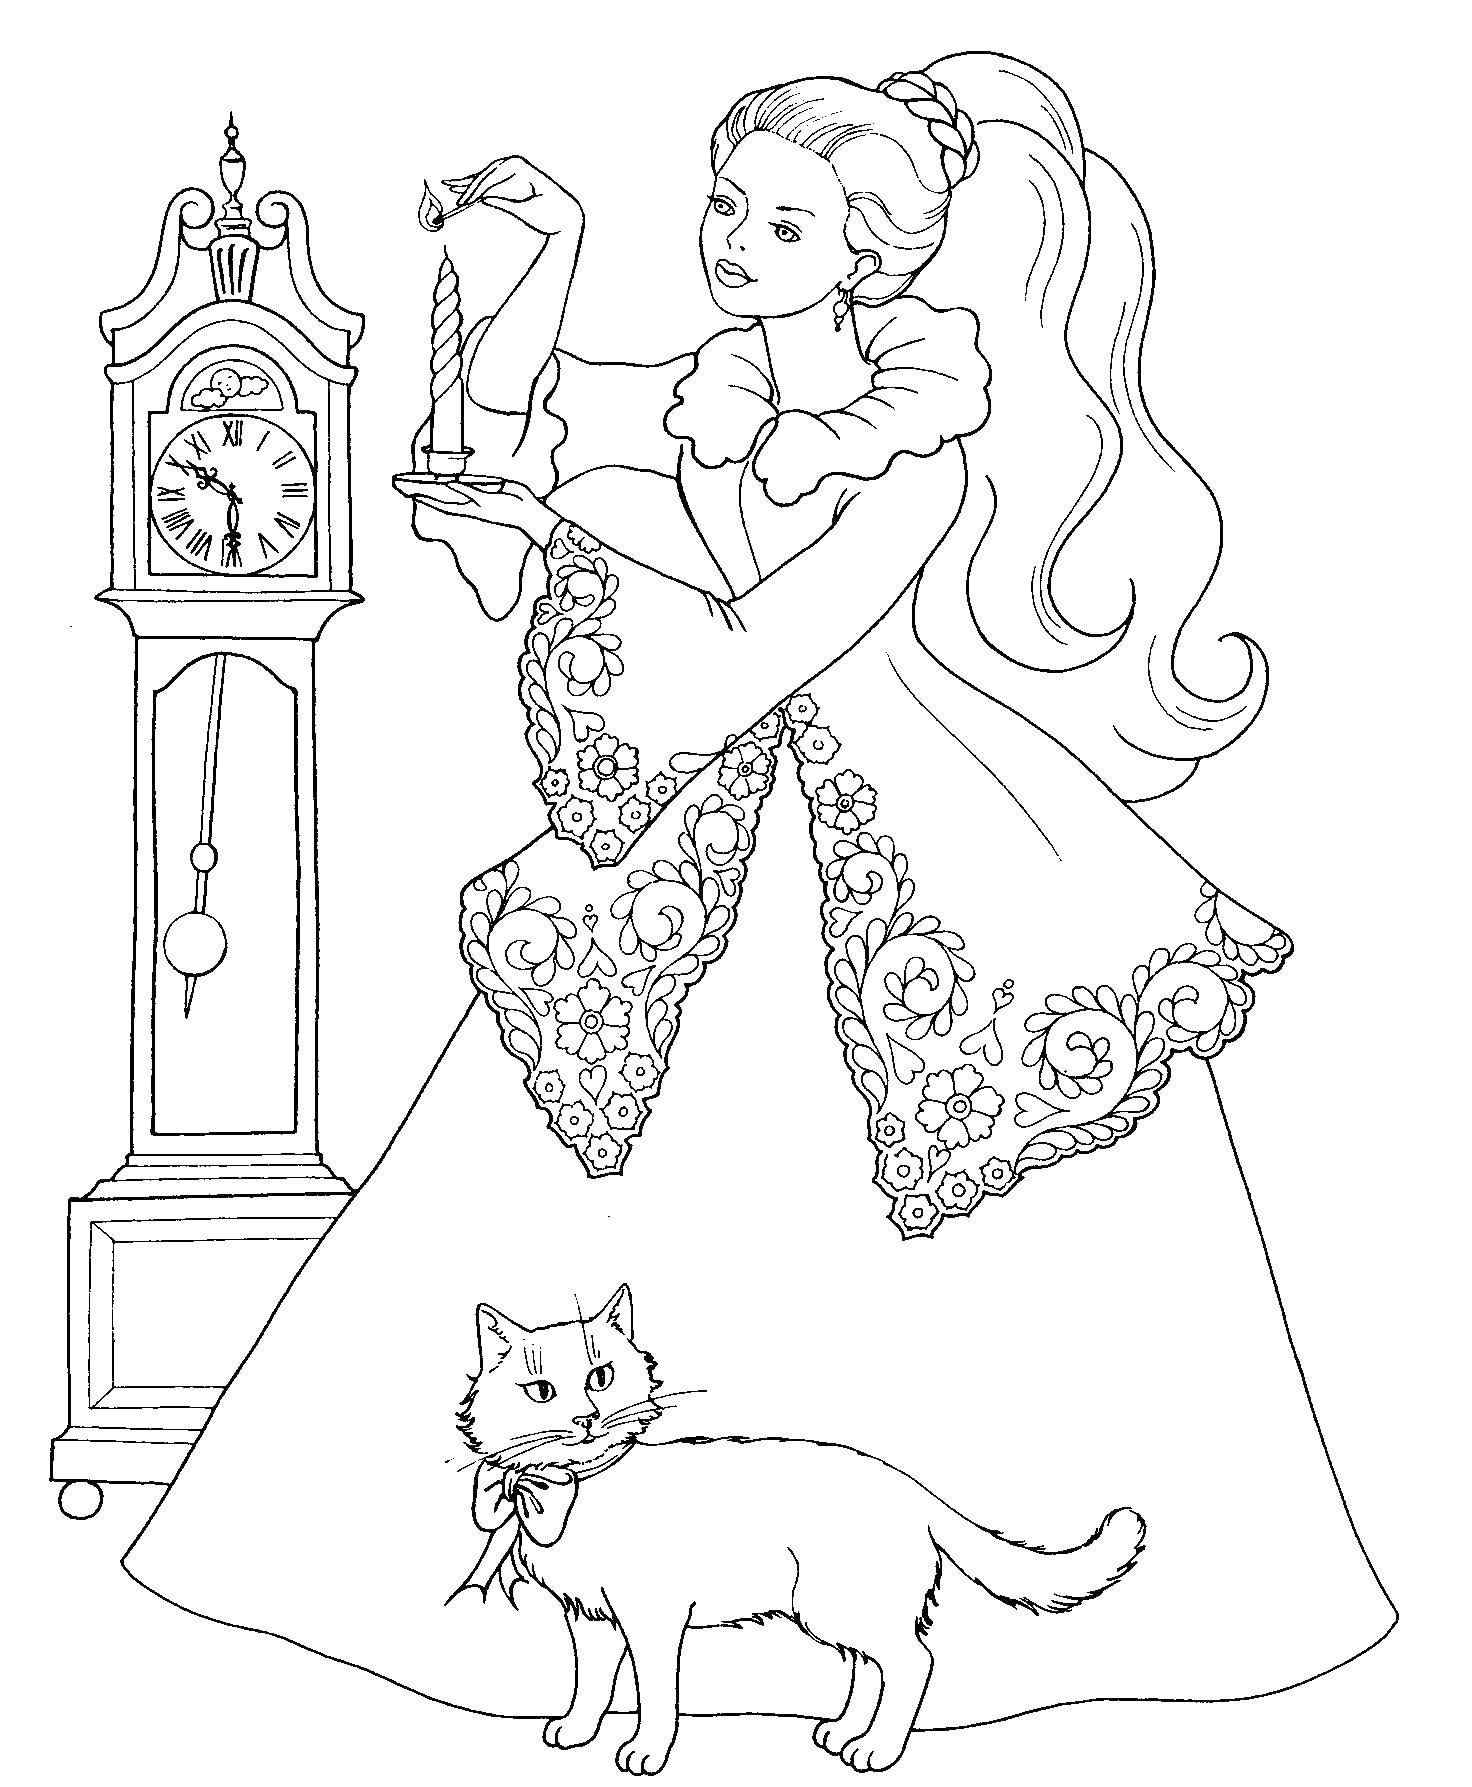 Coloring Princess. Category Princess. Tags:  the cat, Princess.